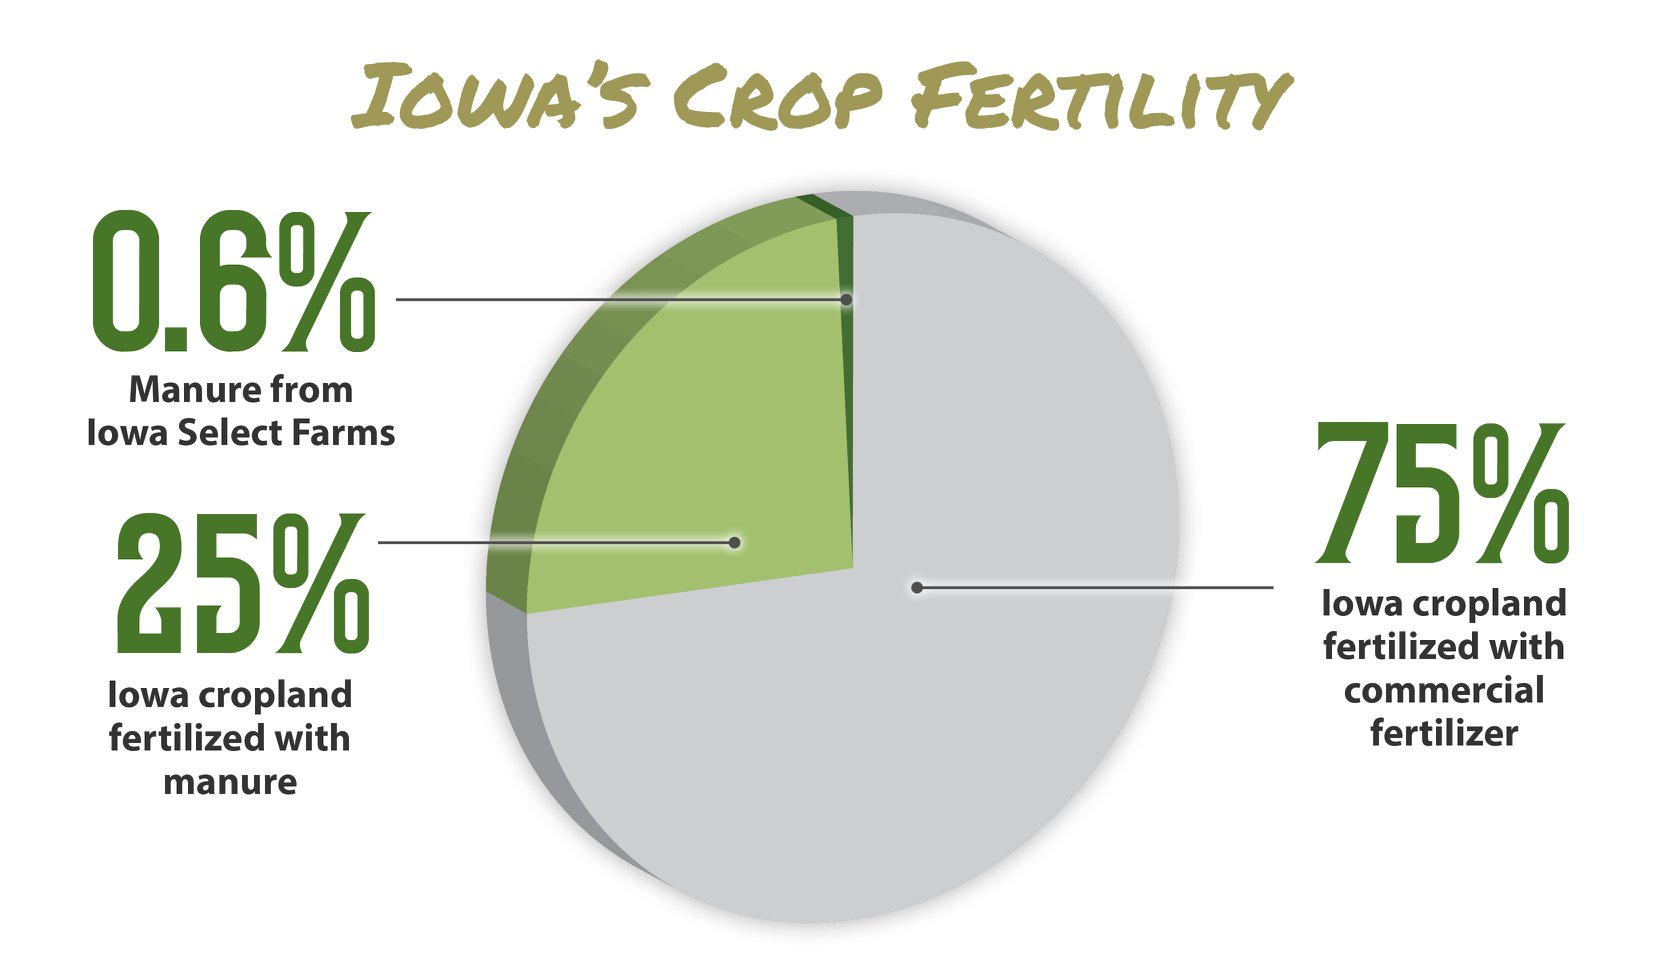 Iowa's Crop Fertility